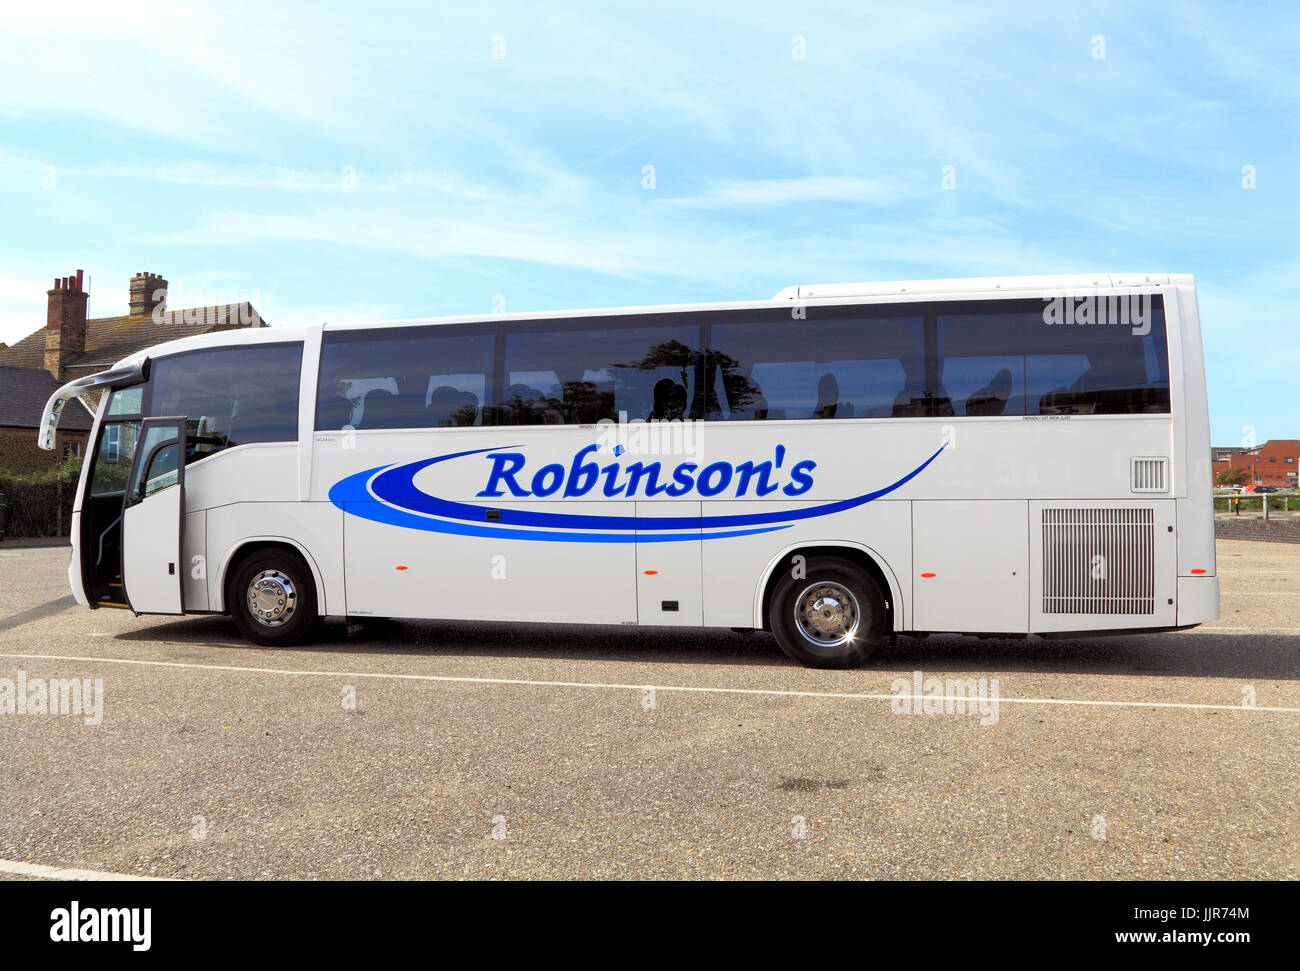 Robinson's, Robinsons, coach, coaches, holidays, trips, transport, England, UK, operator, operators, company, companies Stock Photo